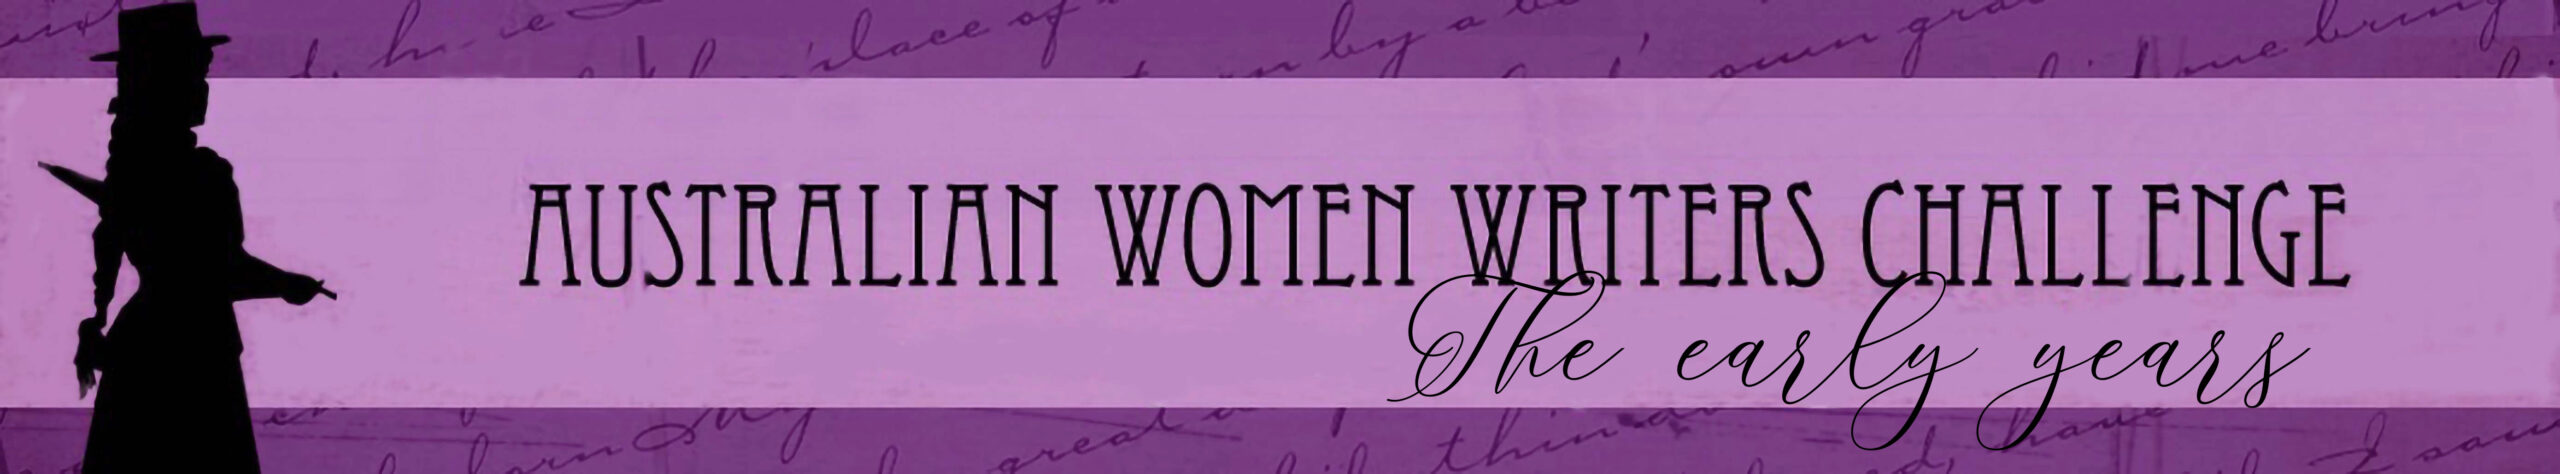 Australian Women Writers Challenge Blog